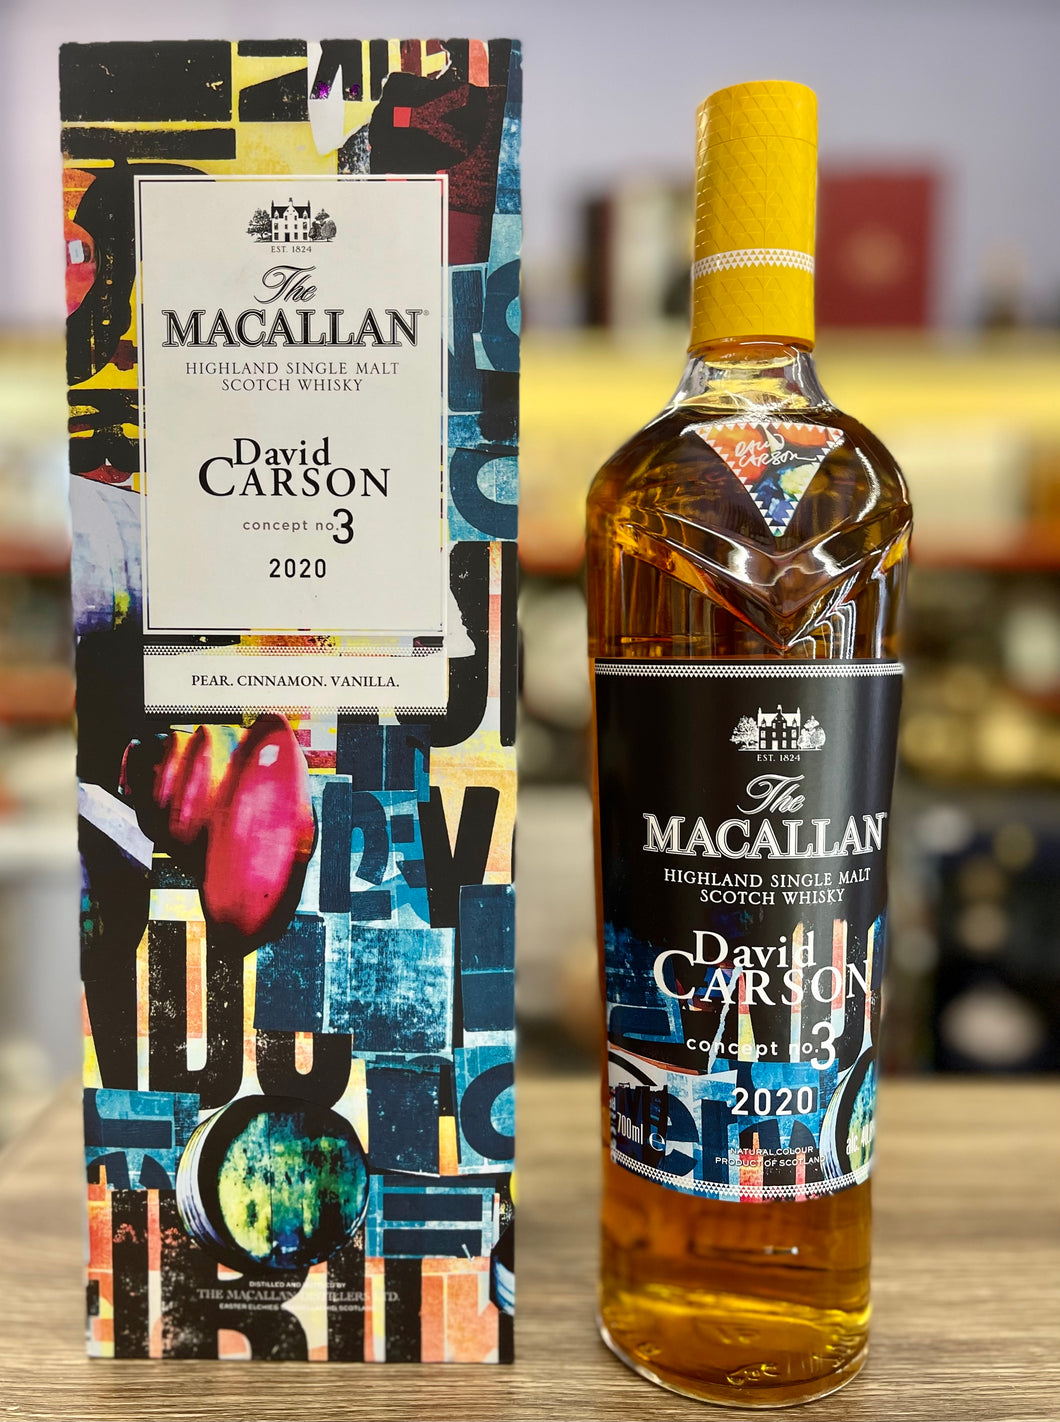 Macallan Concept Number 3 ‘David Carson’ Single Malt Scotch